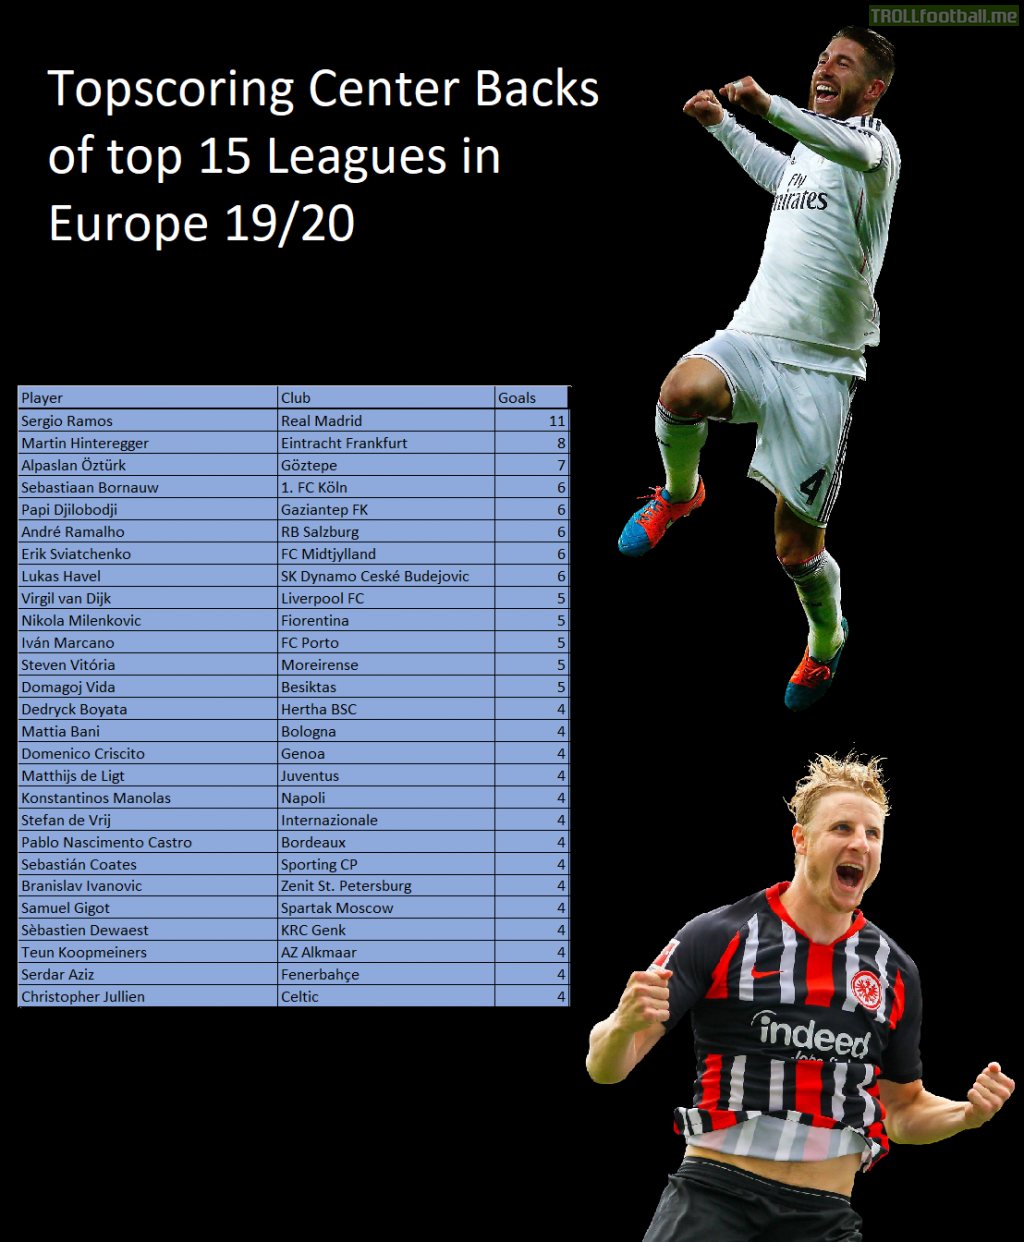 Topscoring Defenders of Top 15 leagues in Europe 19/20